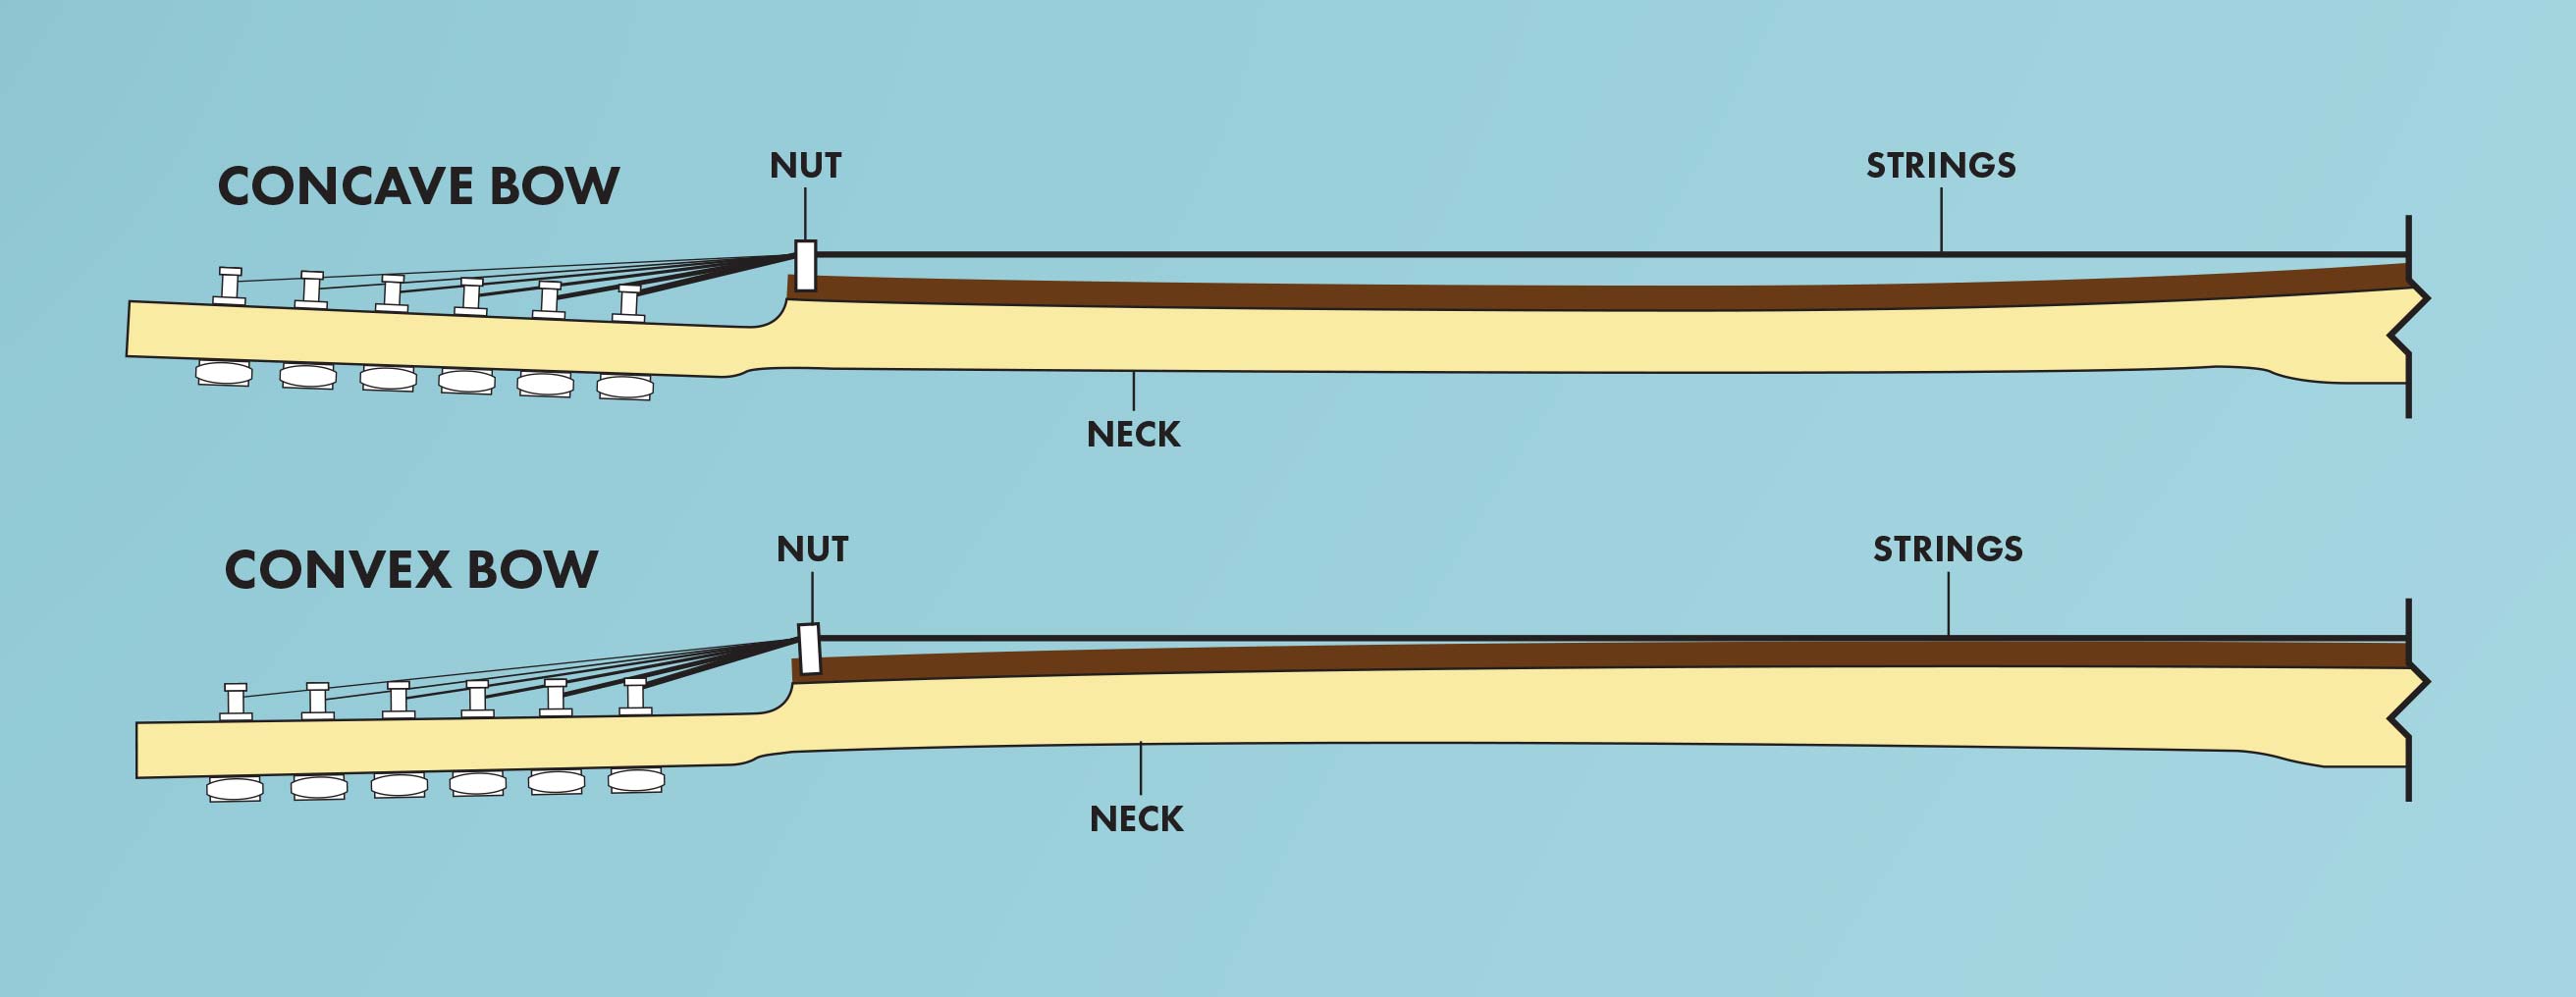 Fender Neck Specifications